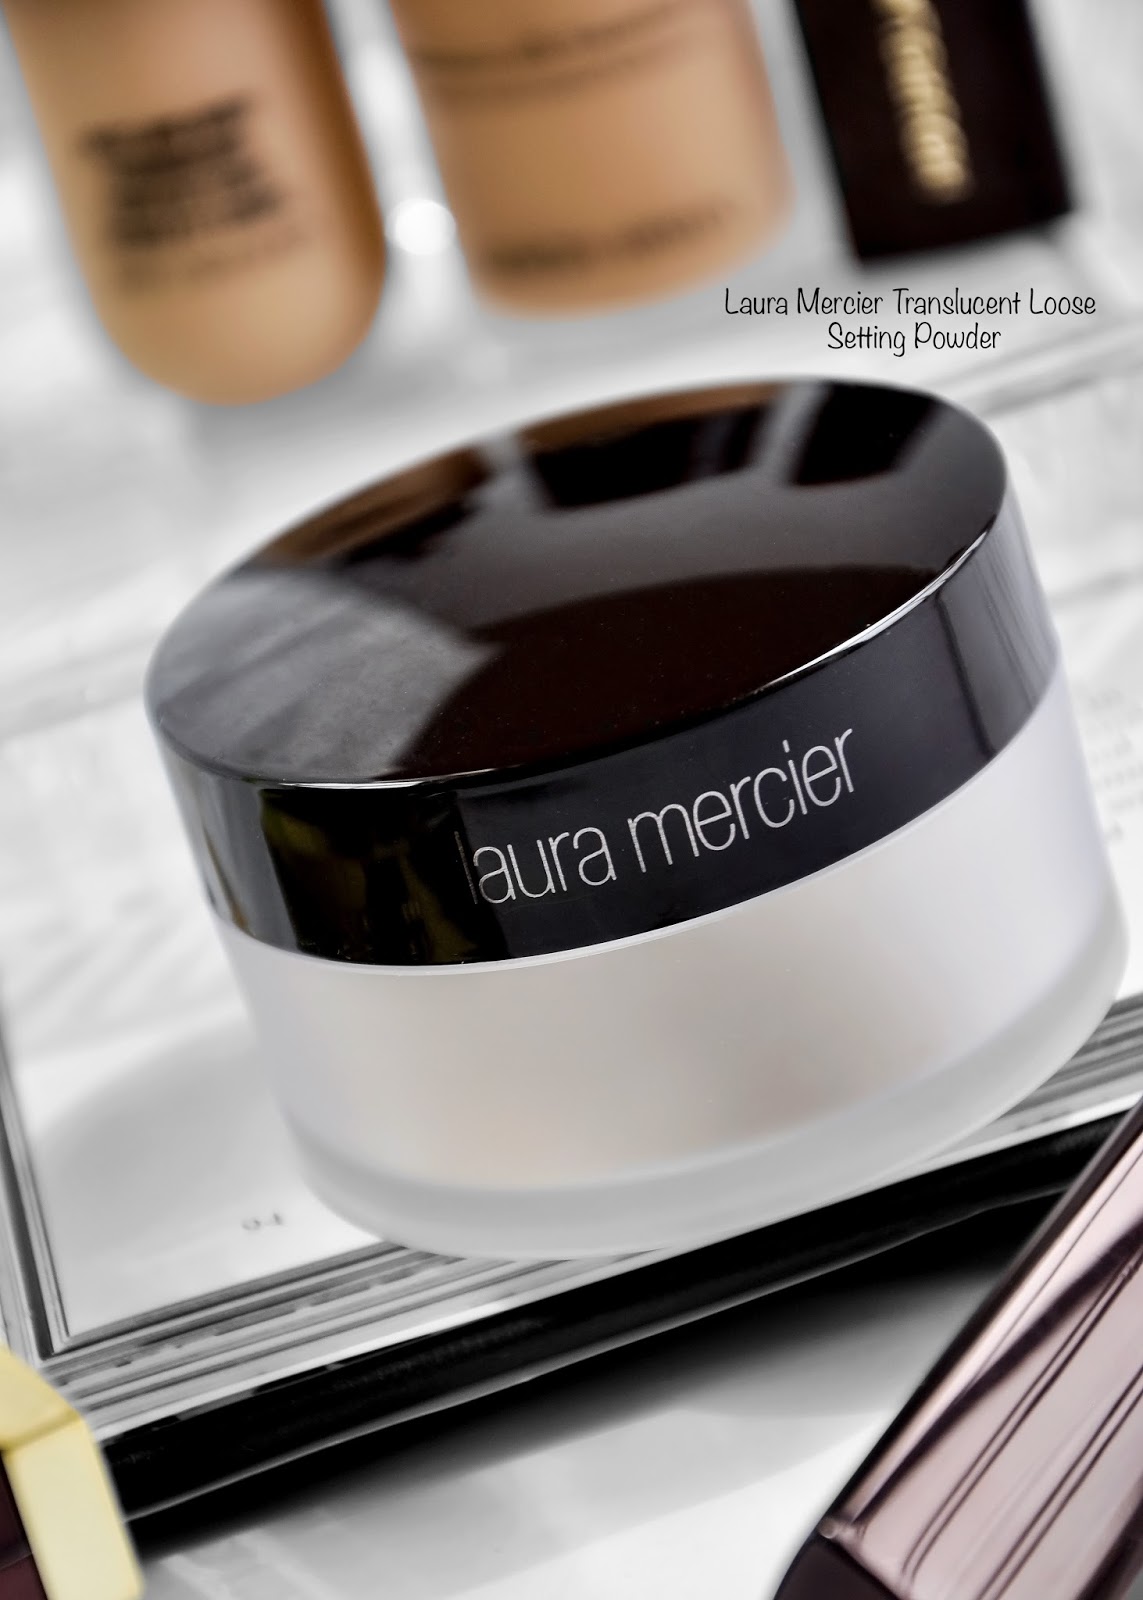 Laura Mercier Translucent Loose Setting Powder review